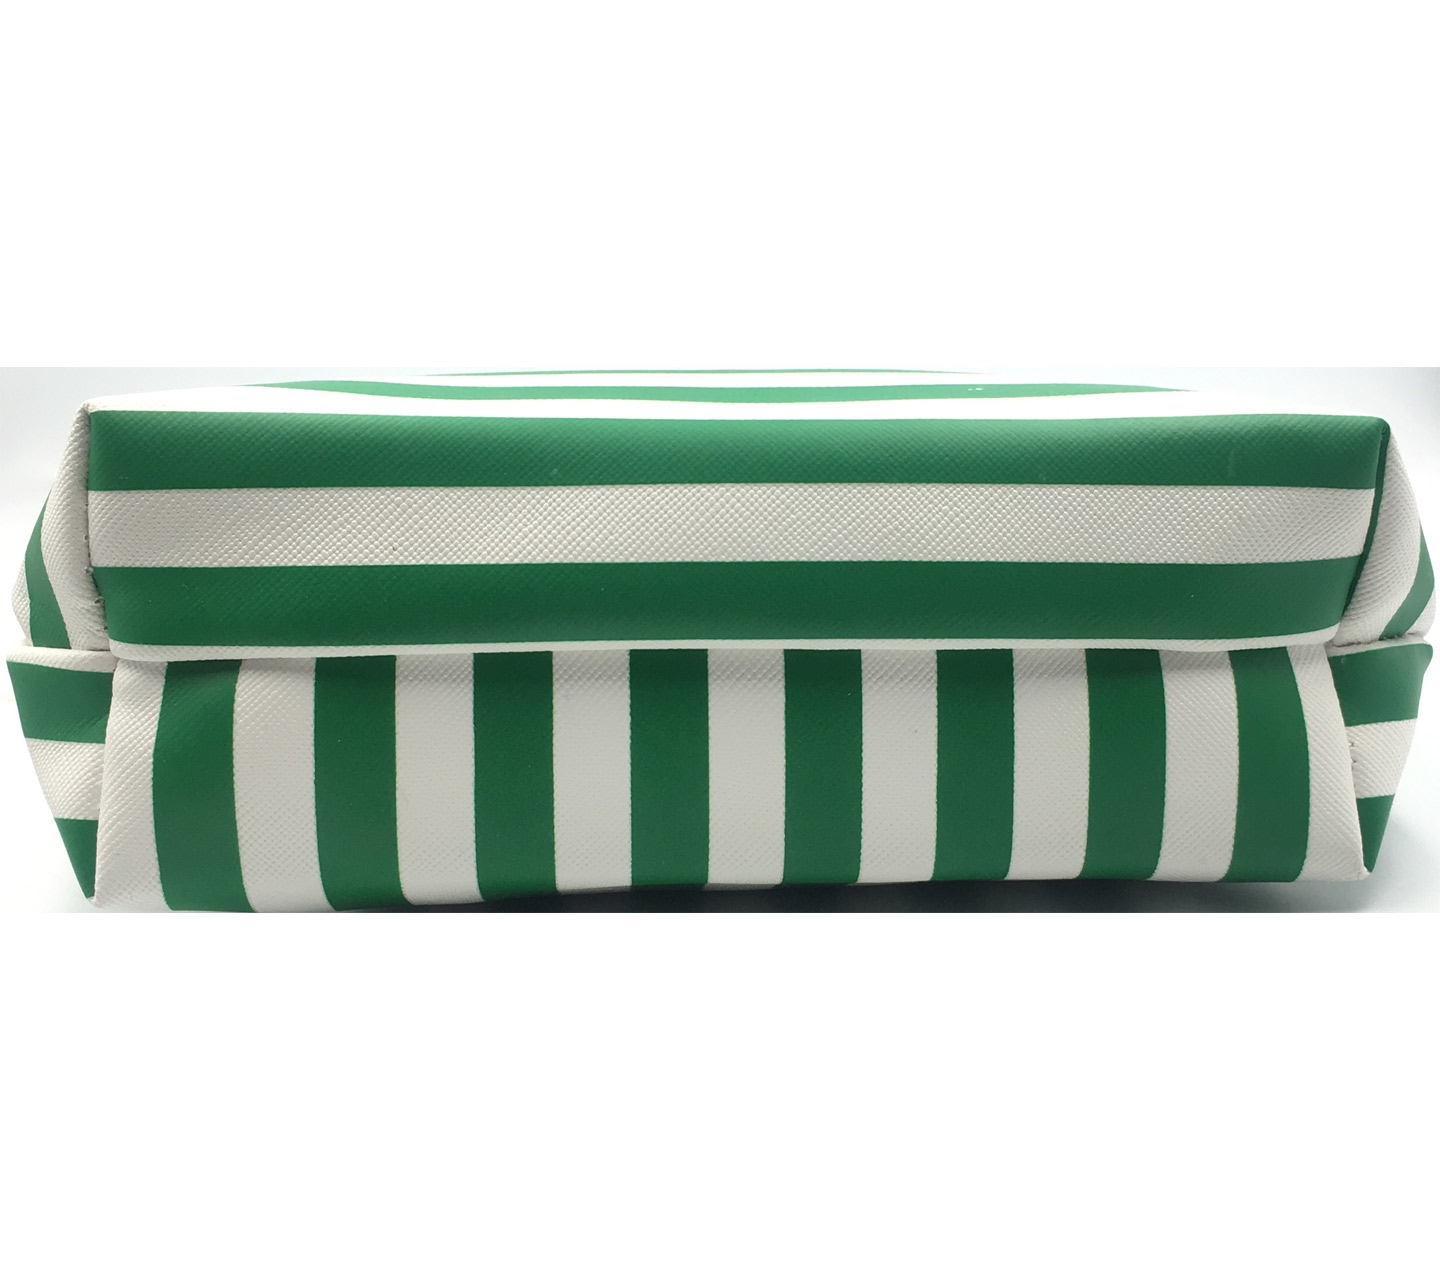 Mario Badascu Green & White Striped Pouch